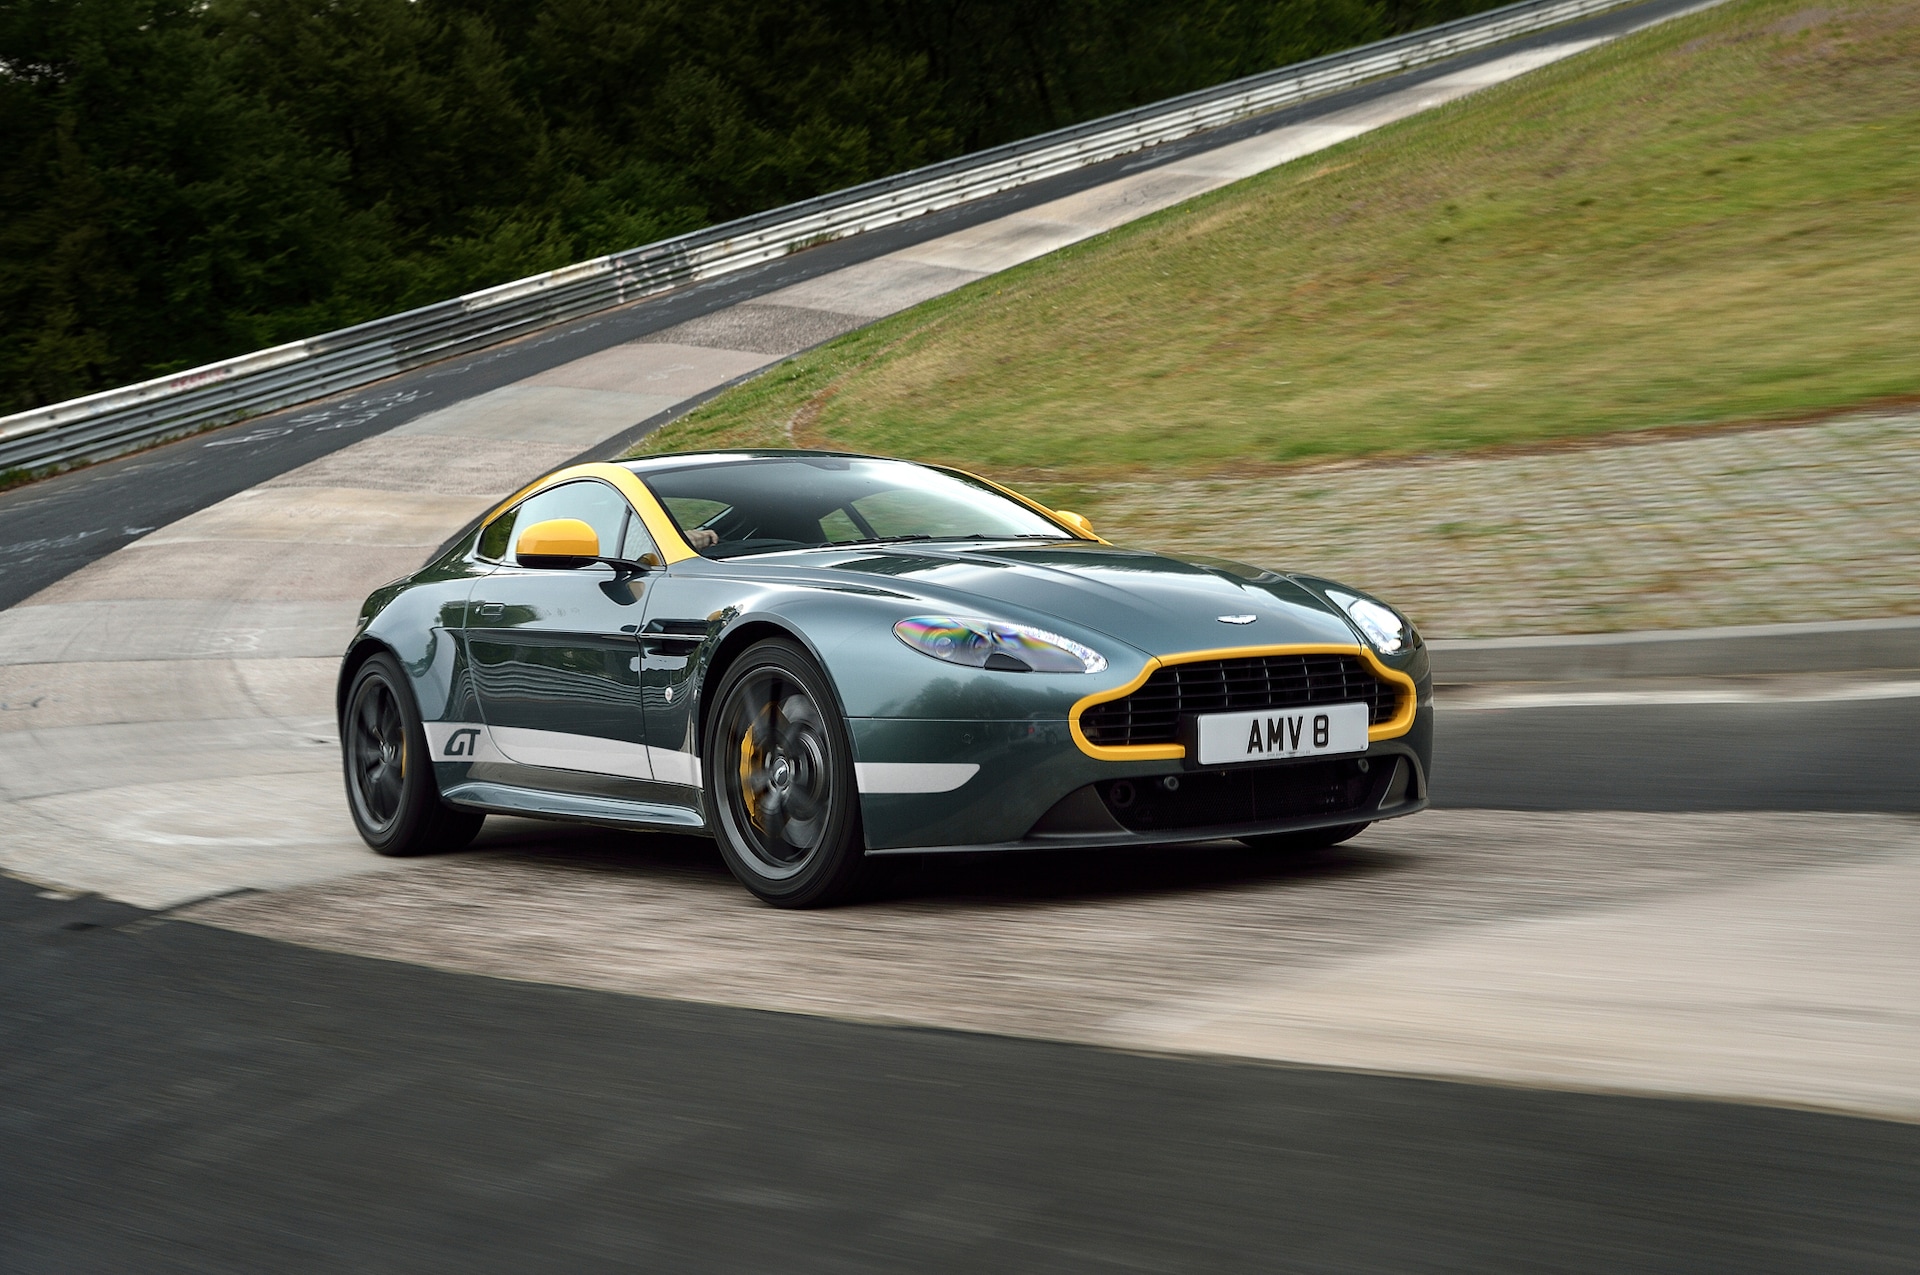 2015 Aston Martin V8 Vantage GT Review